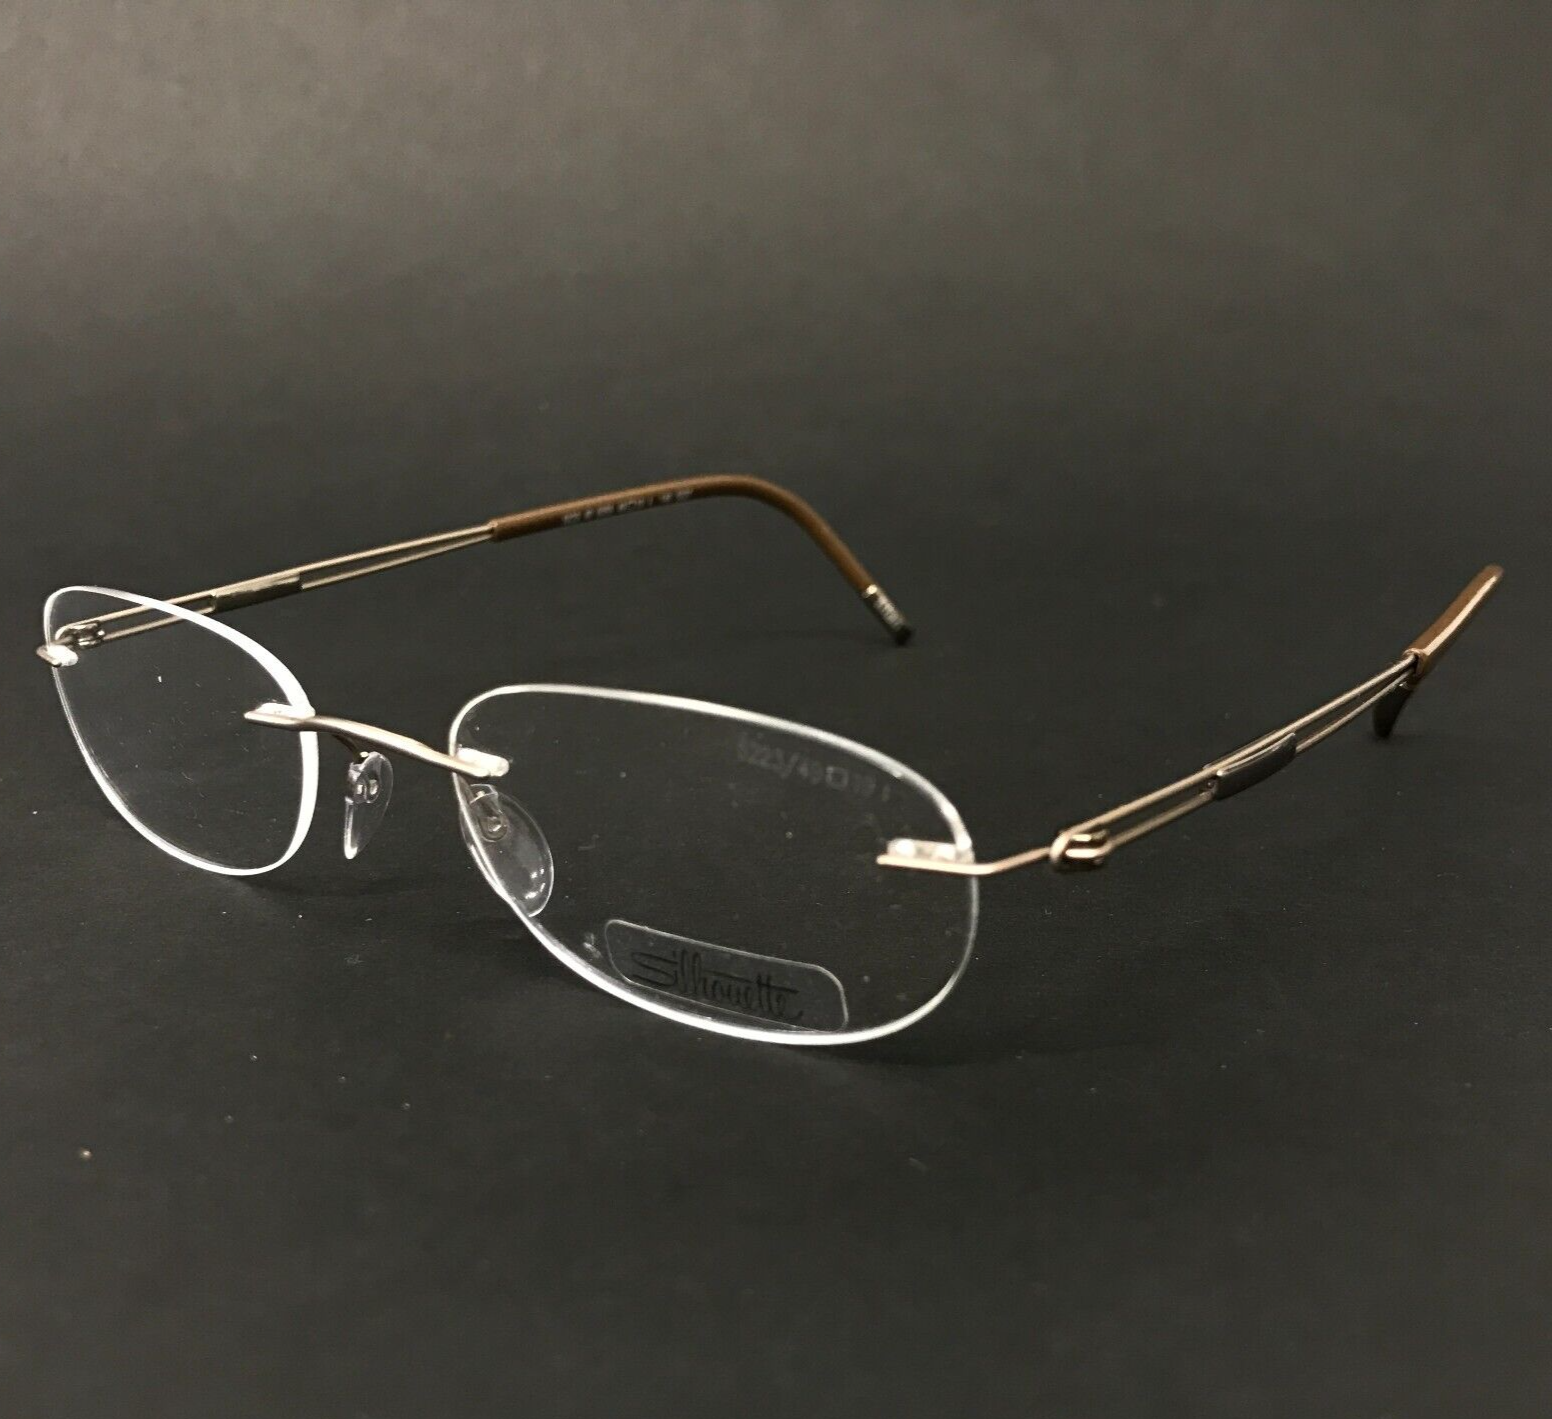 Primary image for Silhouette Eyeglasses Frames 5223 40 6055 Brown Gray Rectangular 49-19-145